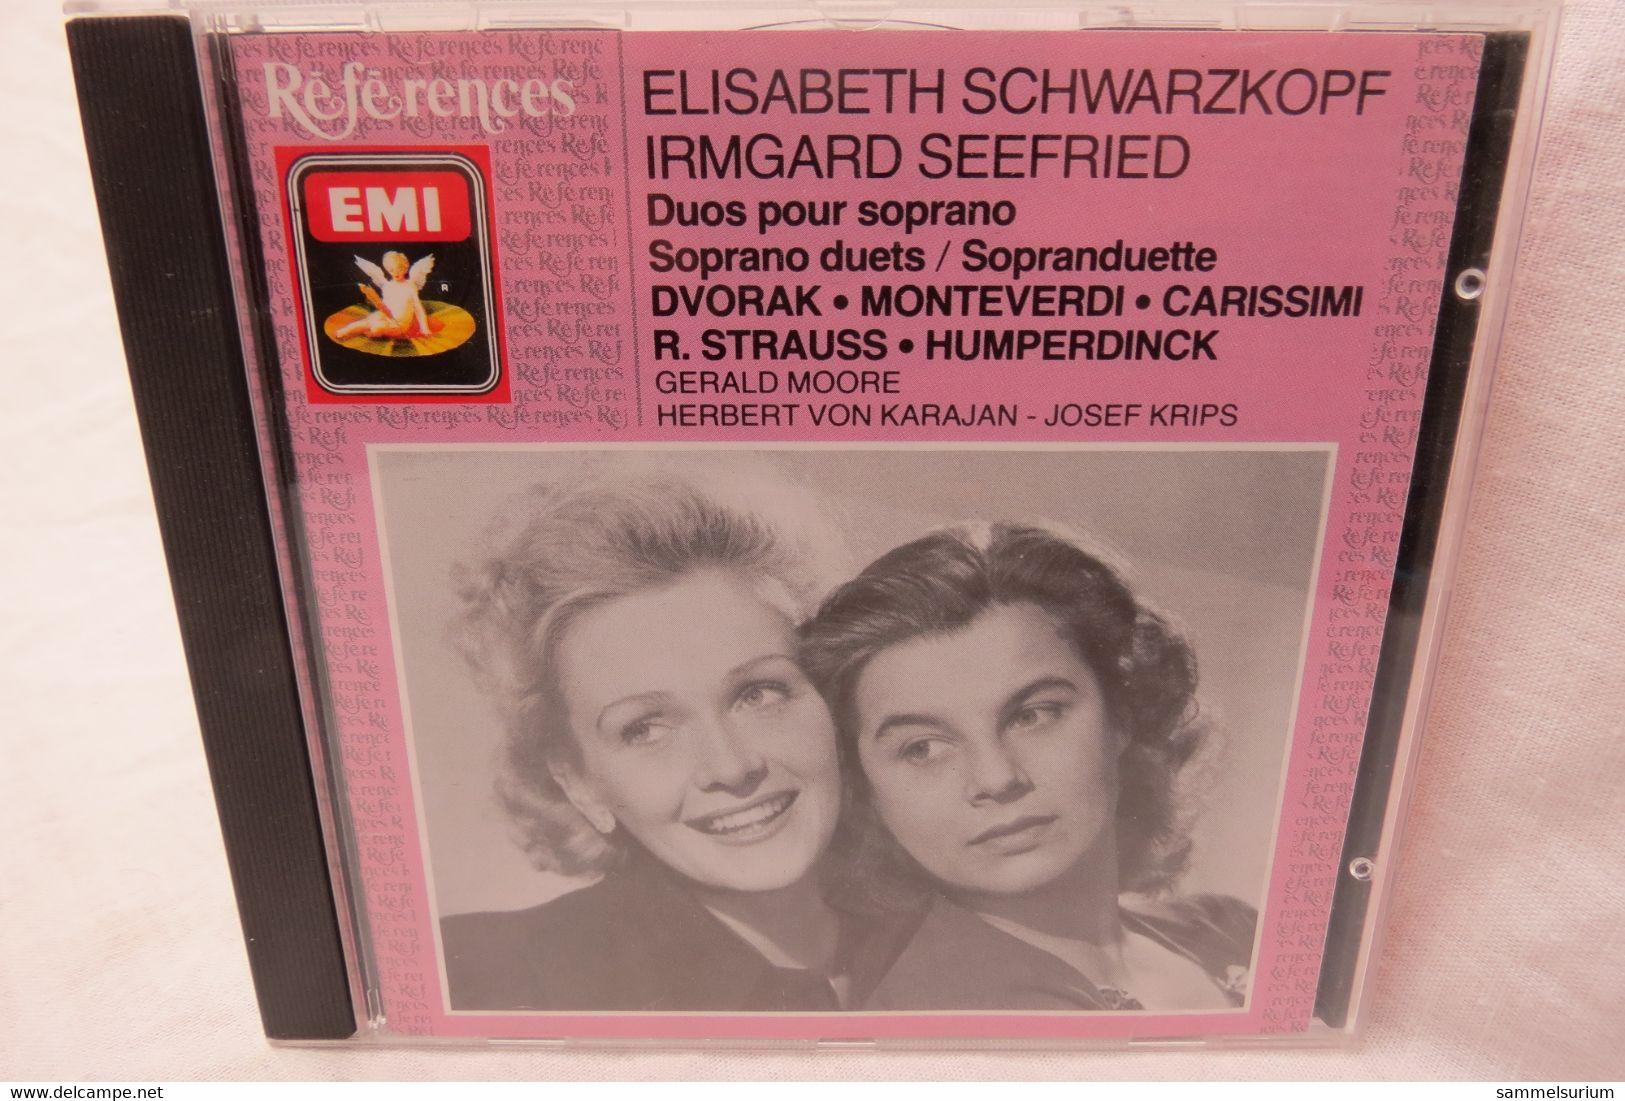 CD "Elisabeth Schwarzkopf / Irmgard Seefried" Soprano Duets / Sopranduette - Opera